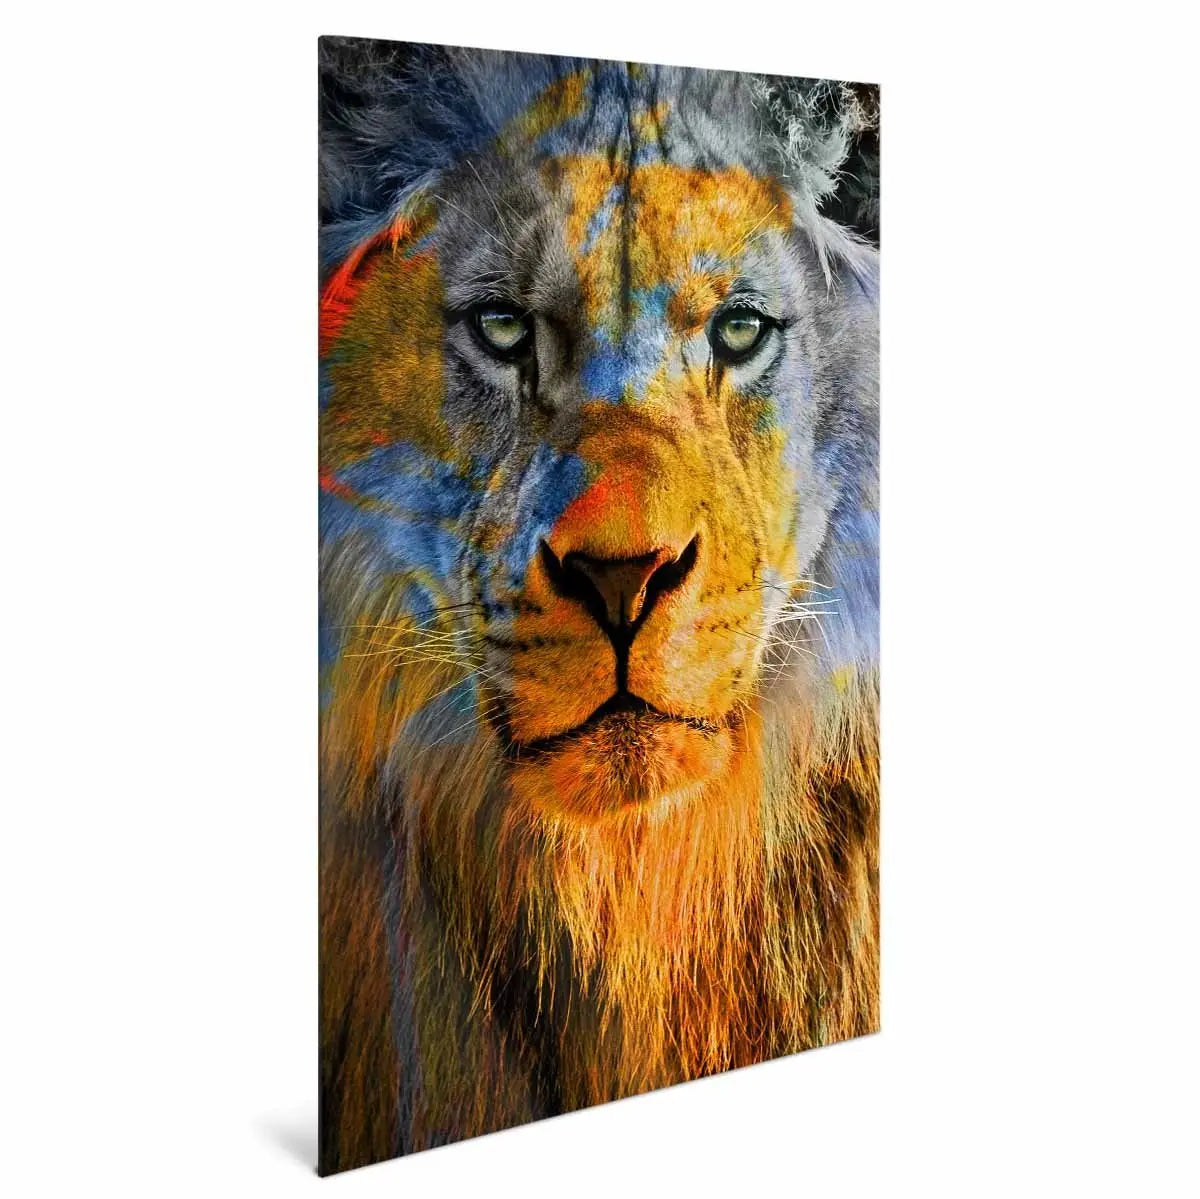 "LION ART" - Art For Everyone